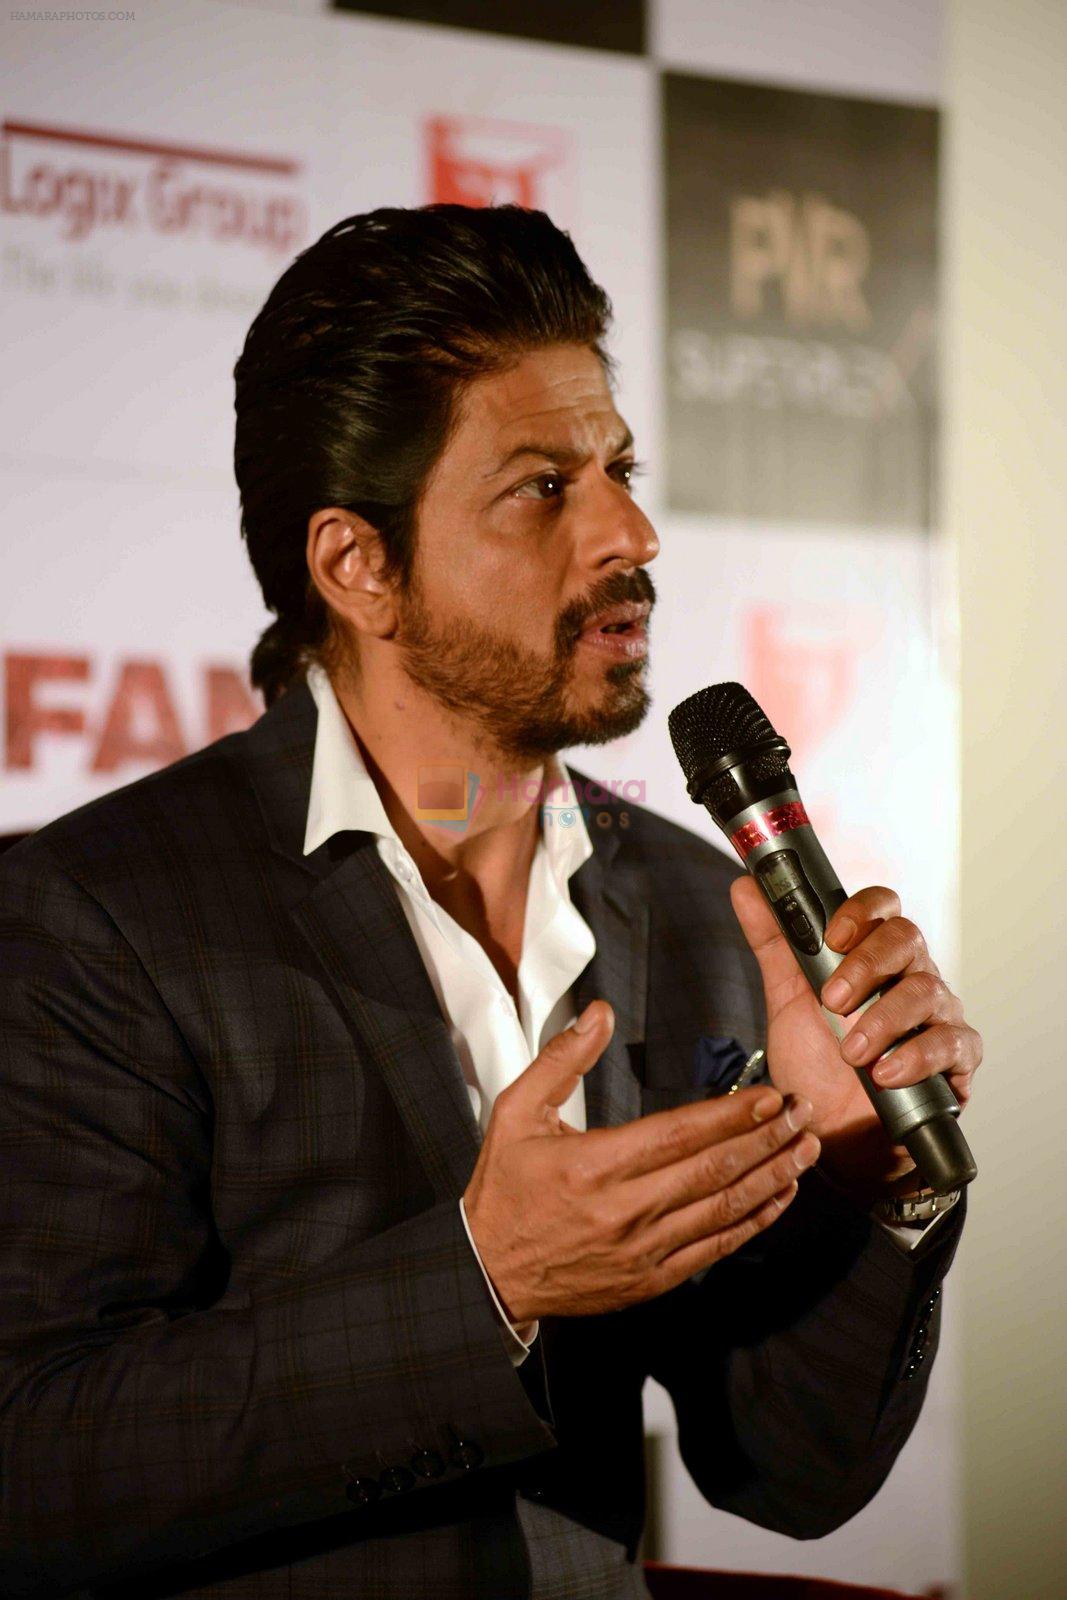 Shahrukh Khan promotes Fan in Noida on 12th April 2016